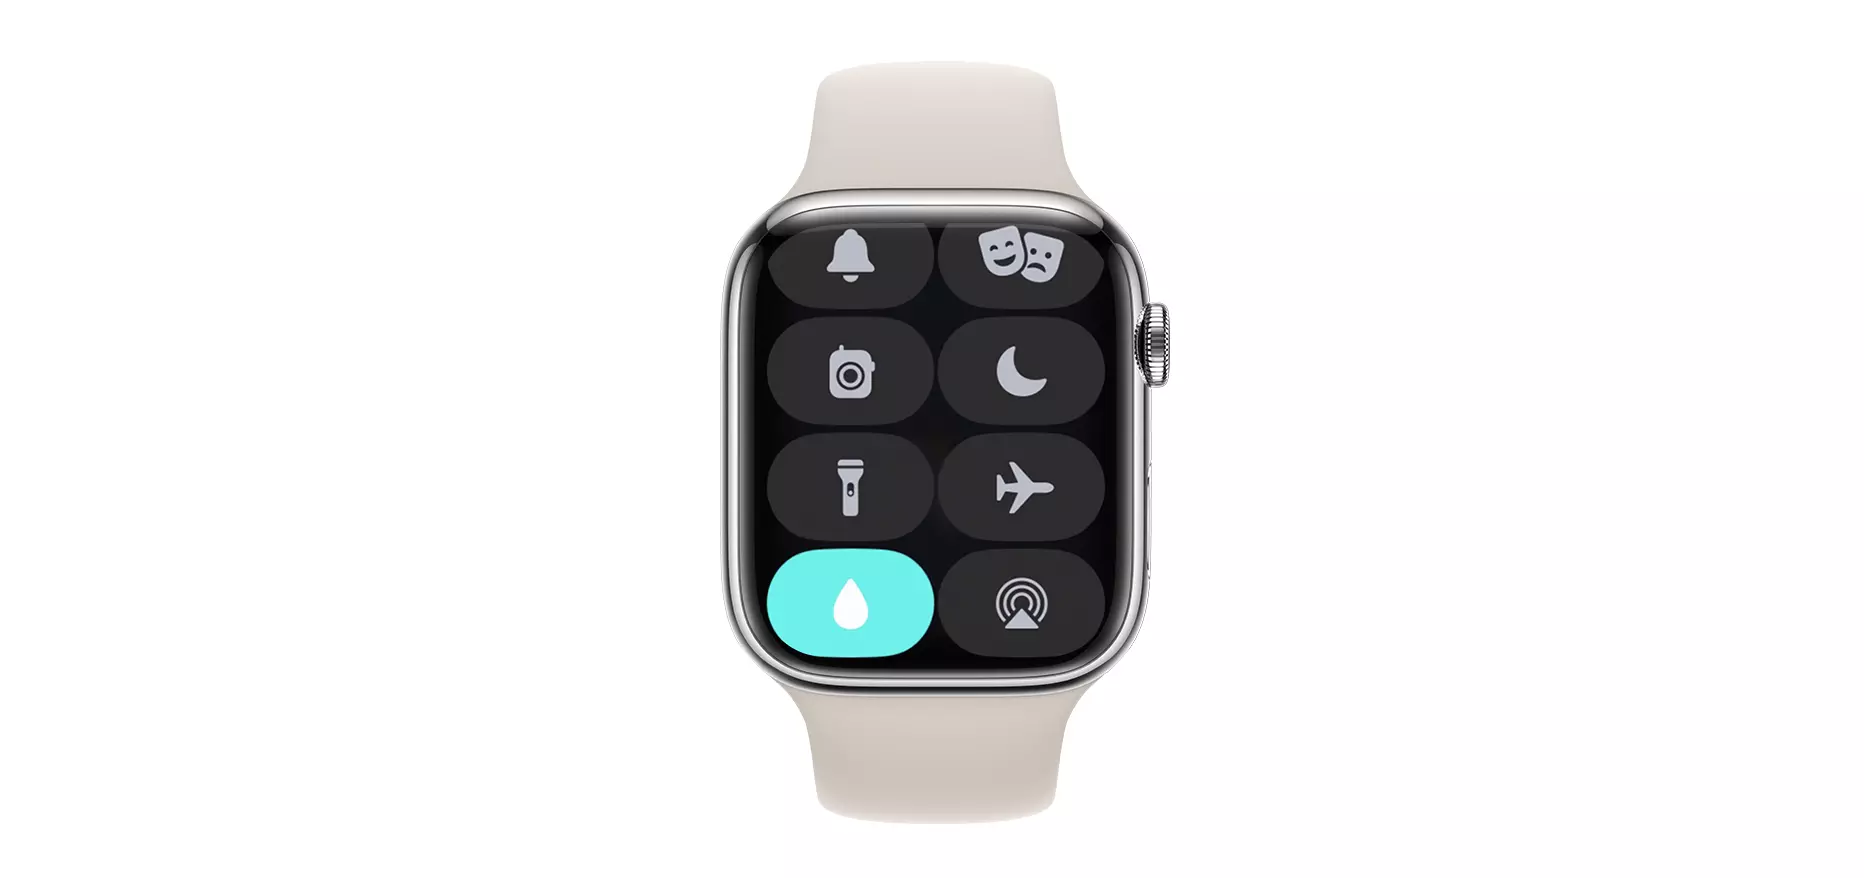 Kako se zaključava ekran Apple Watch slučajnim dodirom